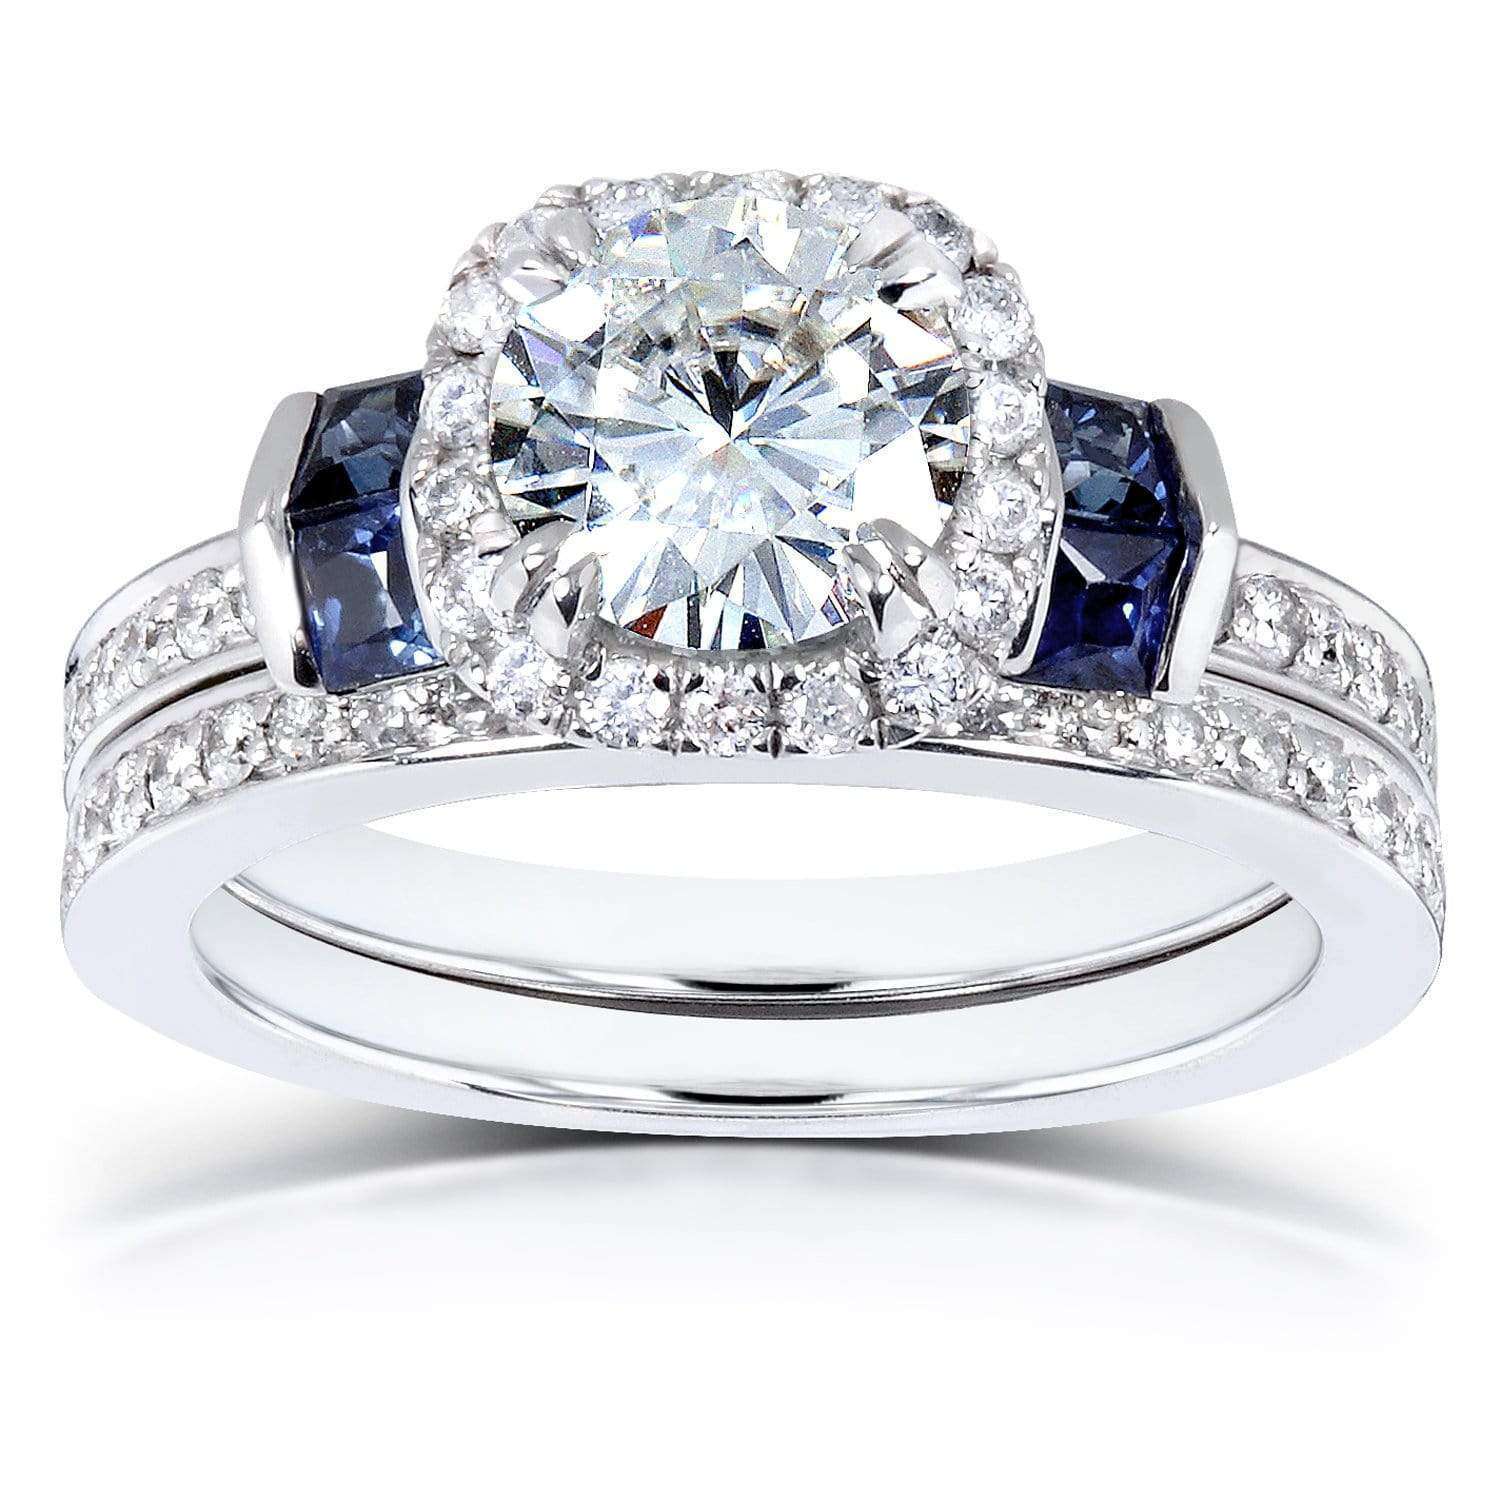 Diamond And Sapphire Wedding Ring Sets - Wedding Rings Sets Ideas